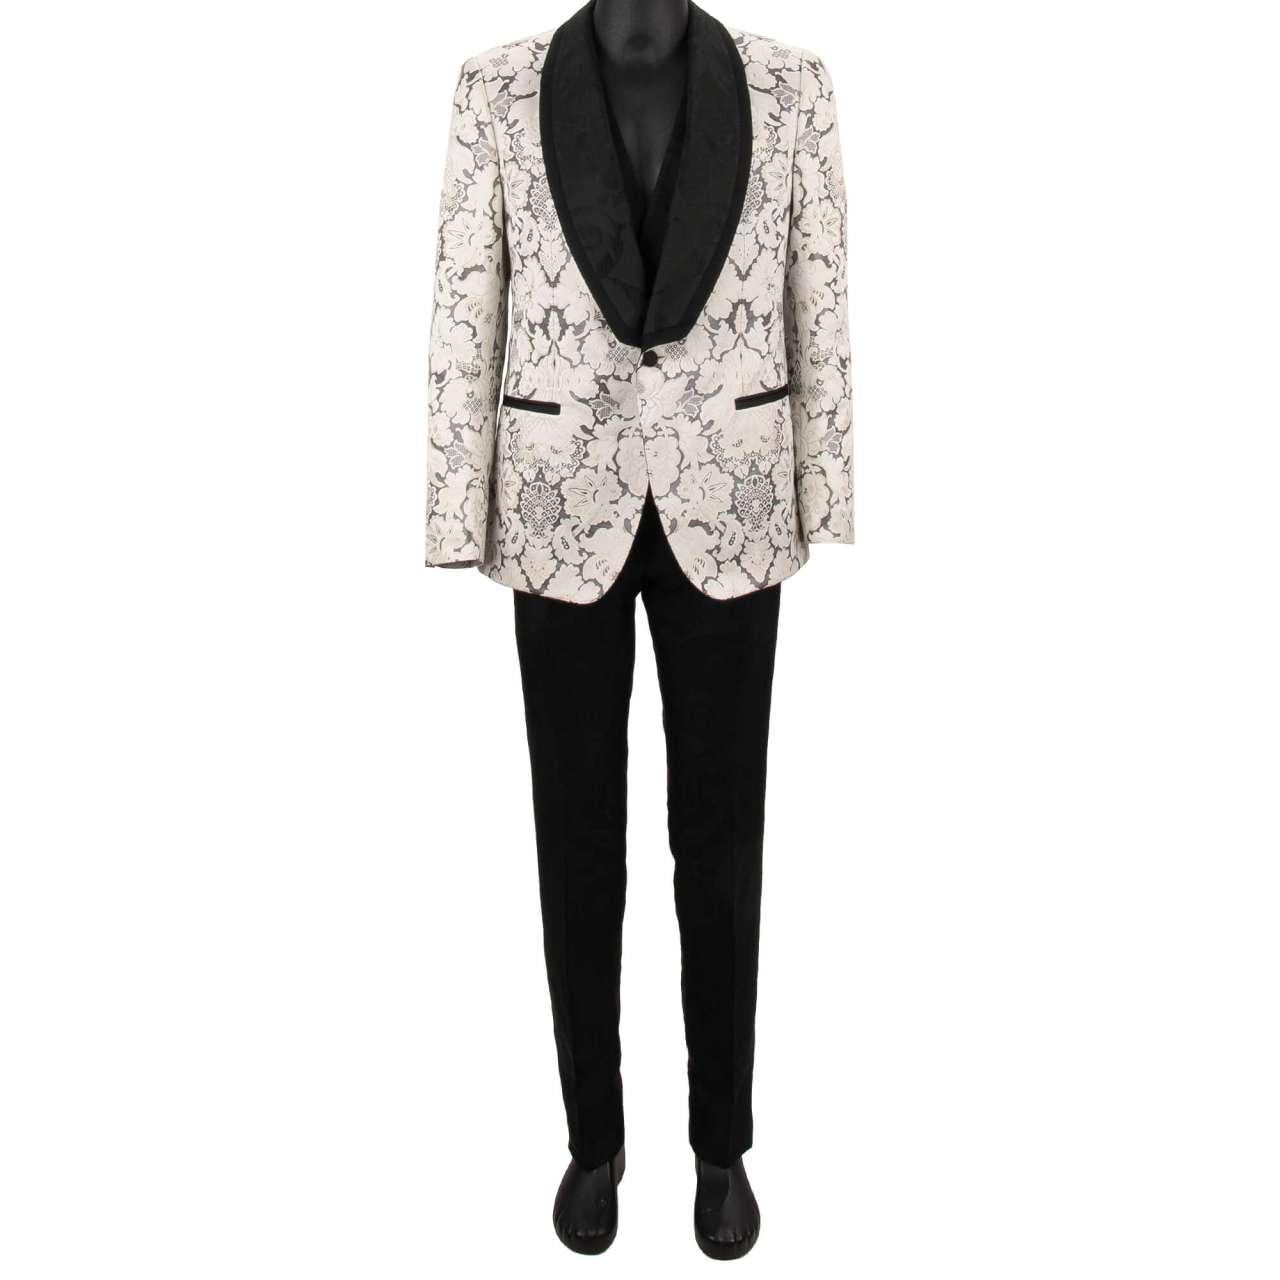 D&G Baroque 3 Piece Jacquard Suit Jacket Waistcoat MARTINI White Black 54 For Sale 3